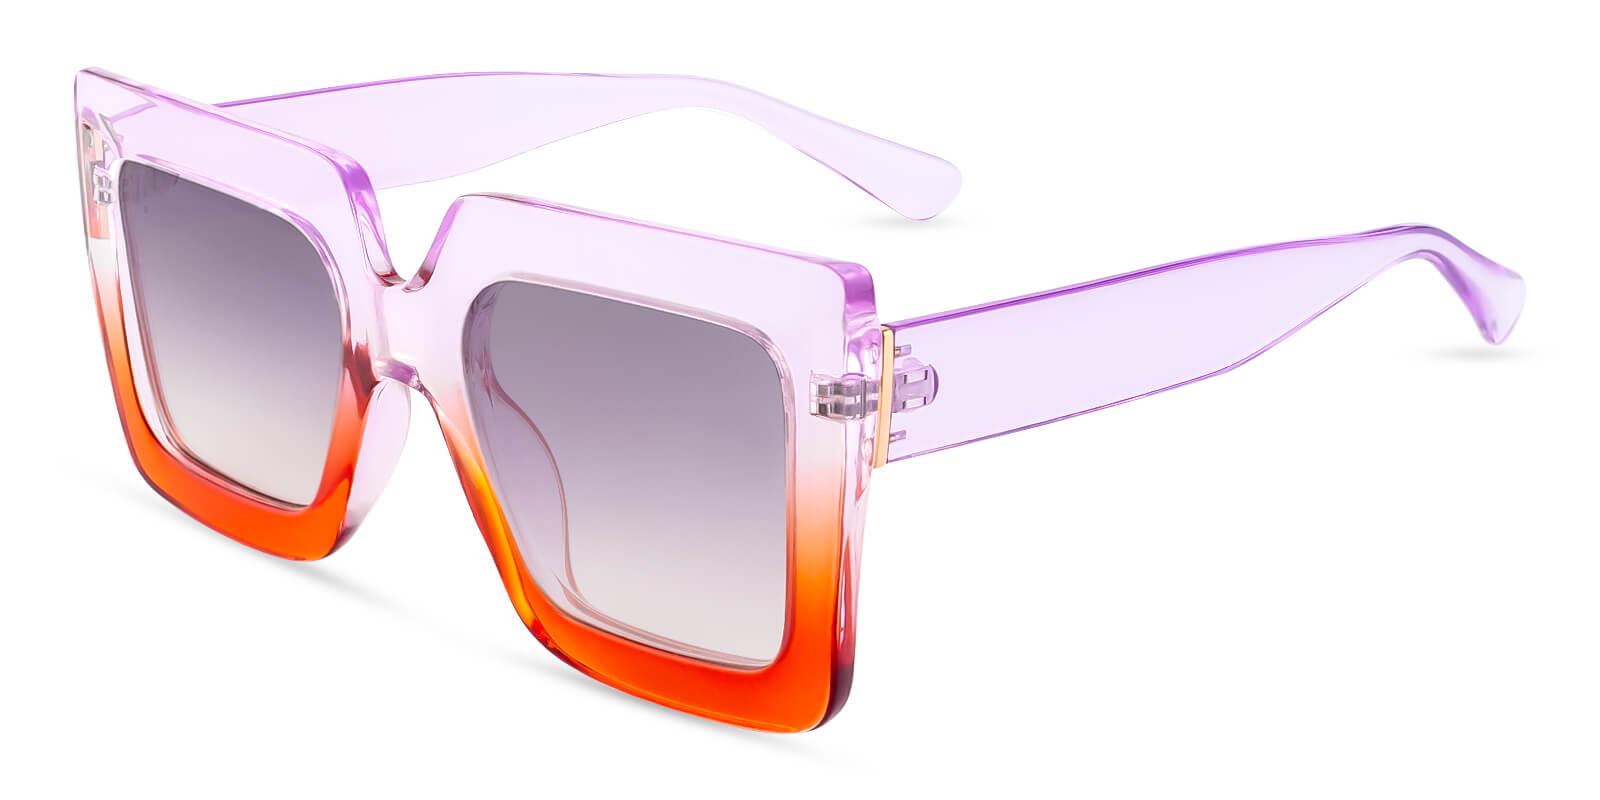 Riddle Purple Plastic Fashion , Sunglasses Frames from ABBE Glasses